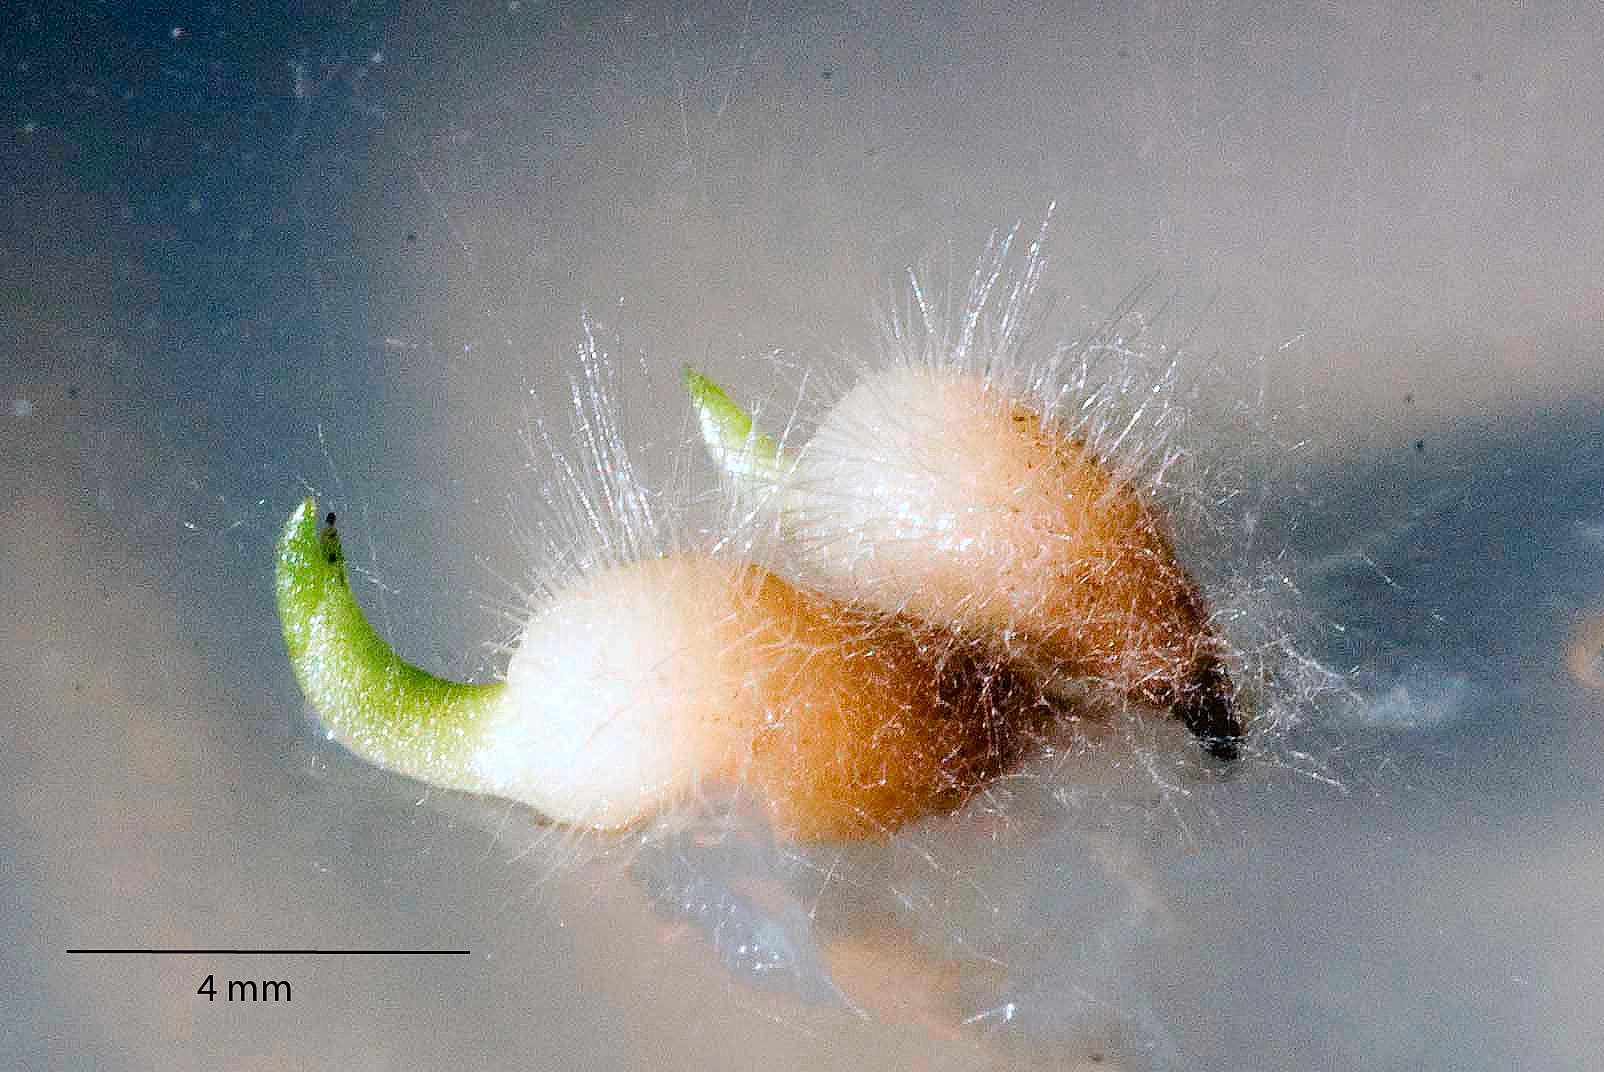 Orkideenes usynlige bestevenn: Frø av narrmarihånd (Anacamptis morio) pakket varsomt inn i en ‘kuvøse’ av rothår med Ceratobasidium-mykorrhizasopp.